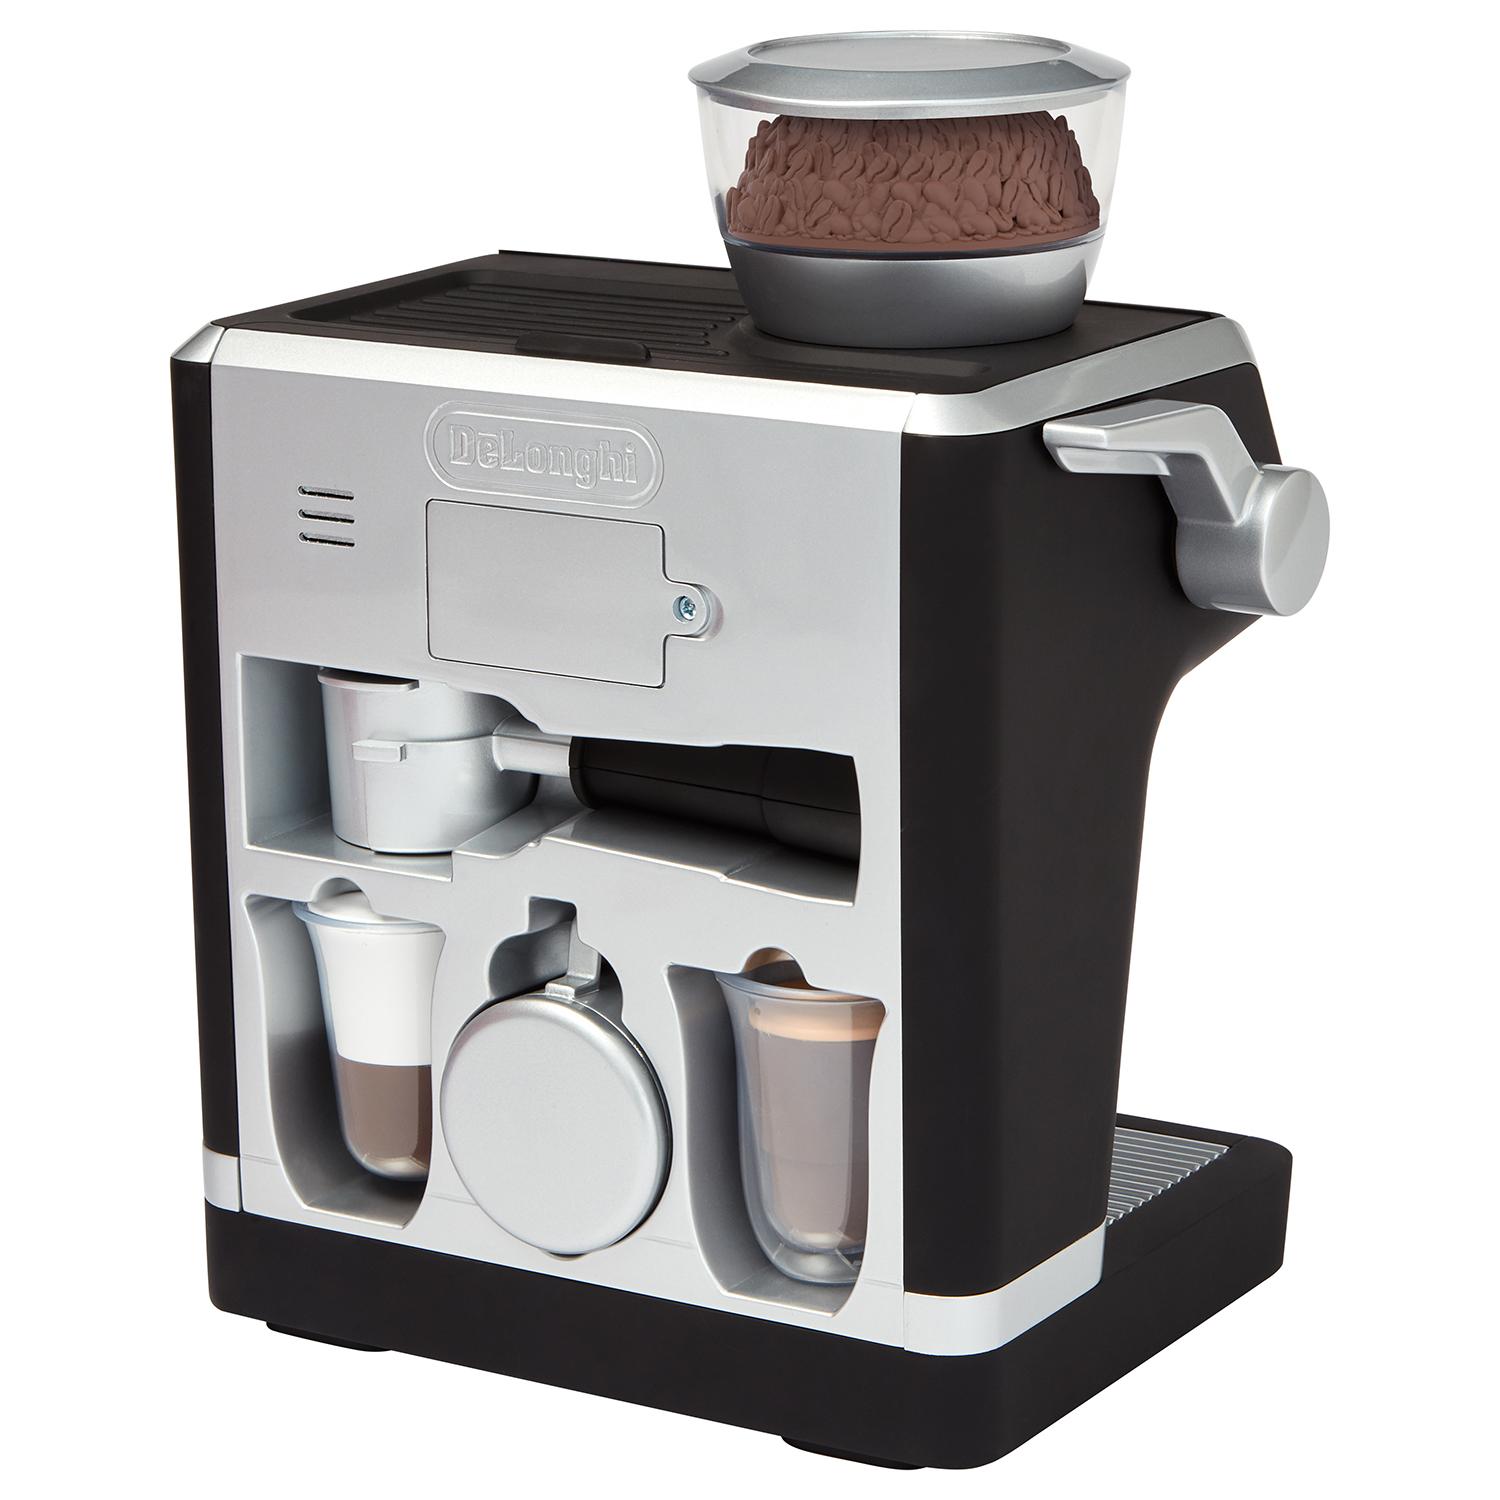 Casdon DeLonghi Barista Coffee Machine